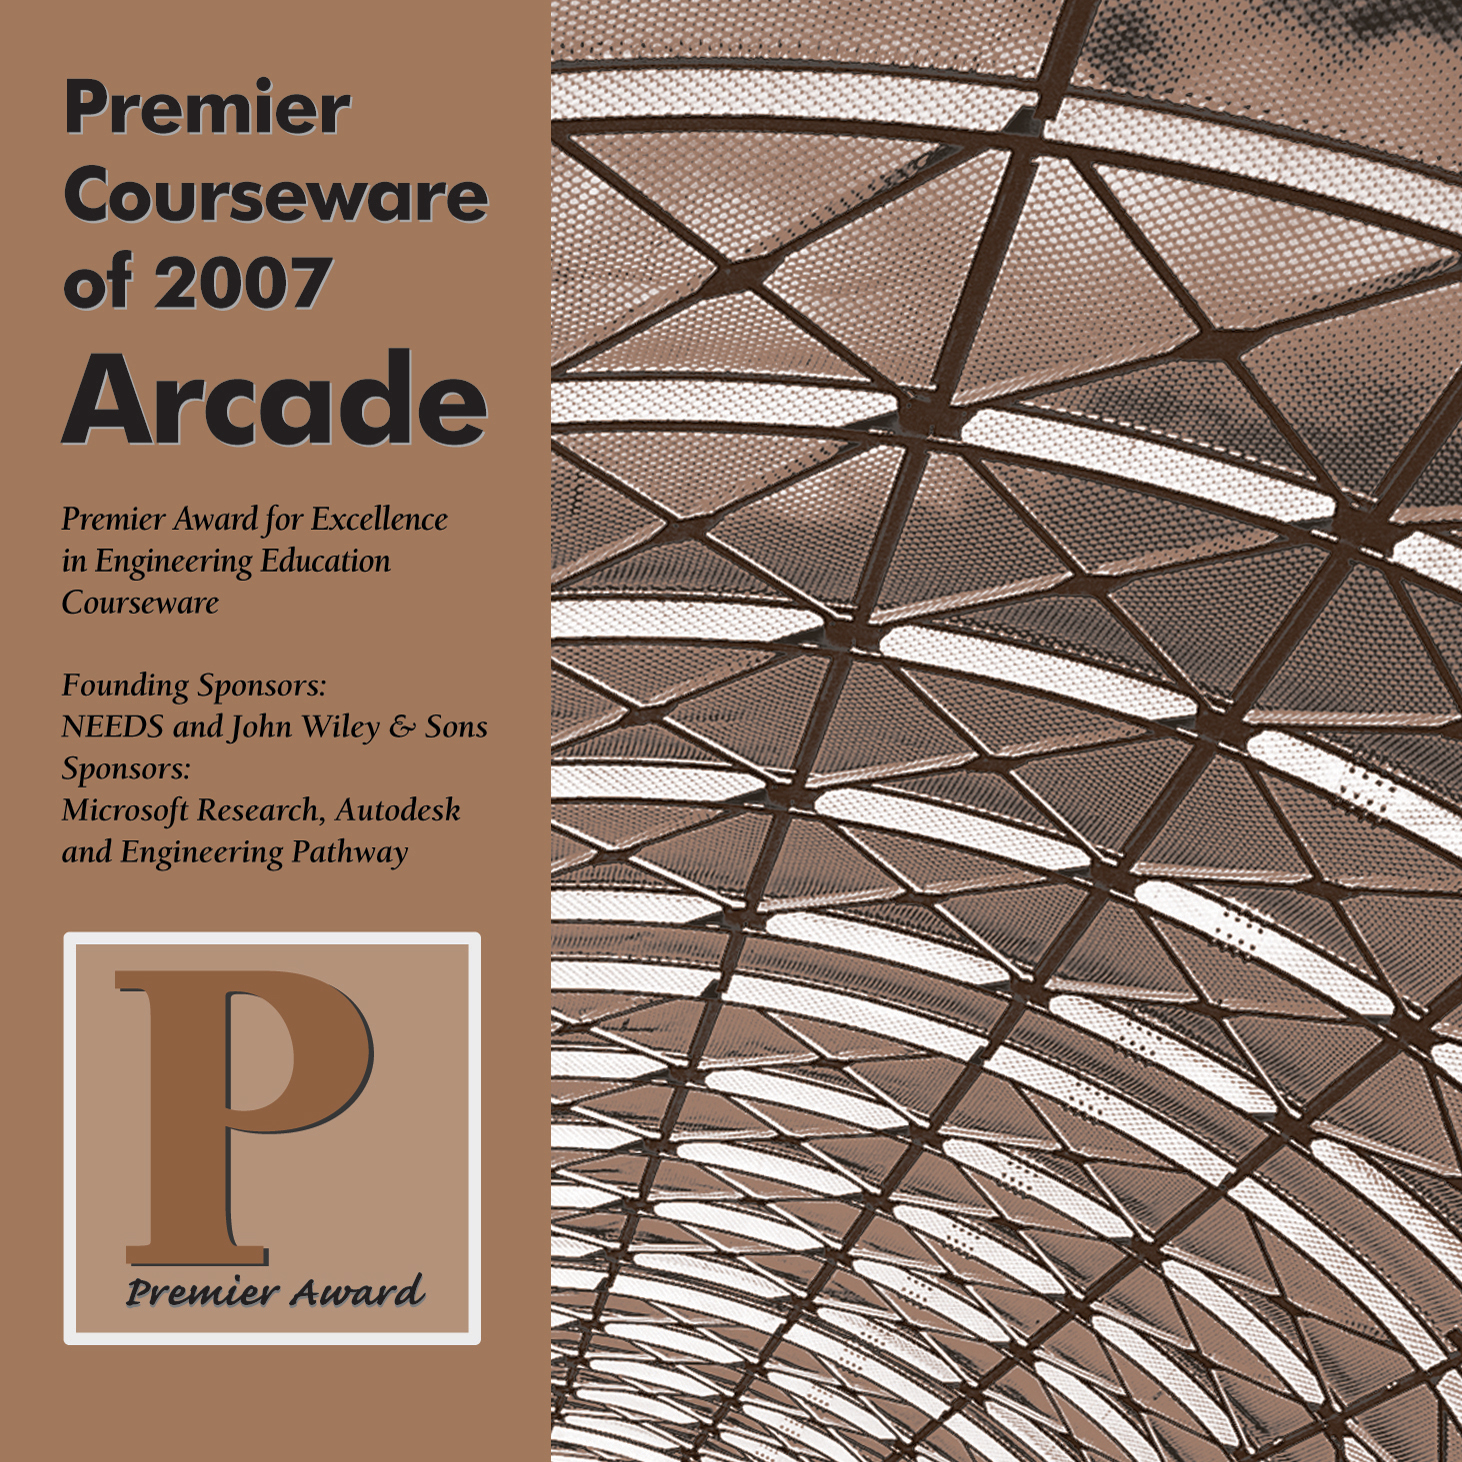 Premier Courseware of 2007